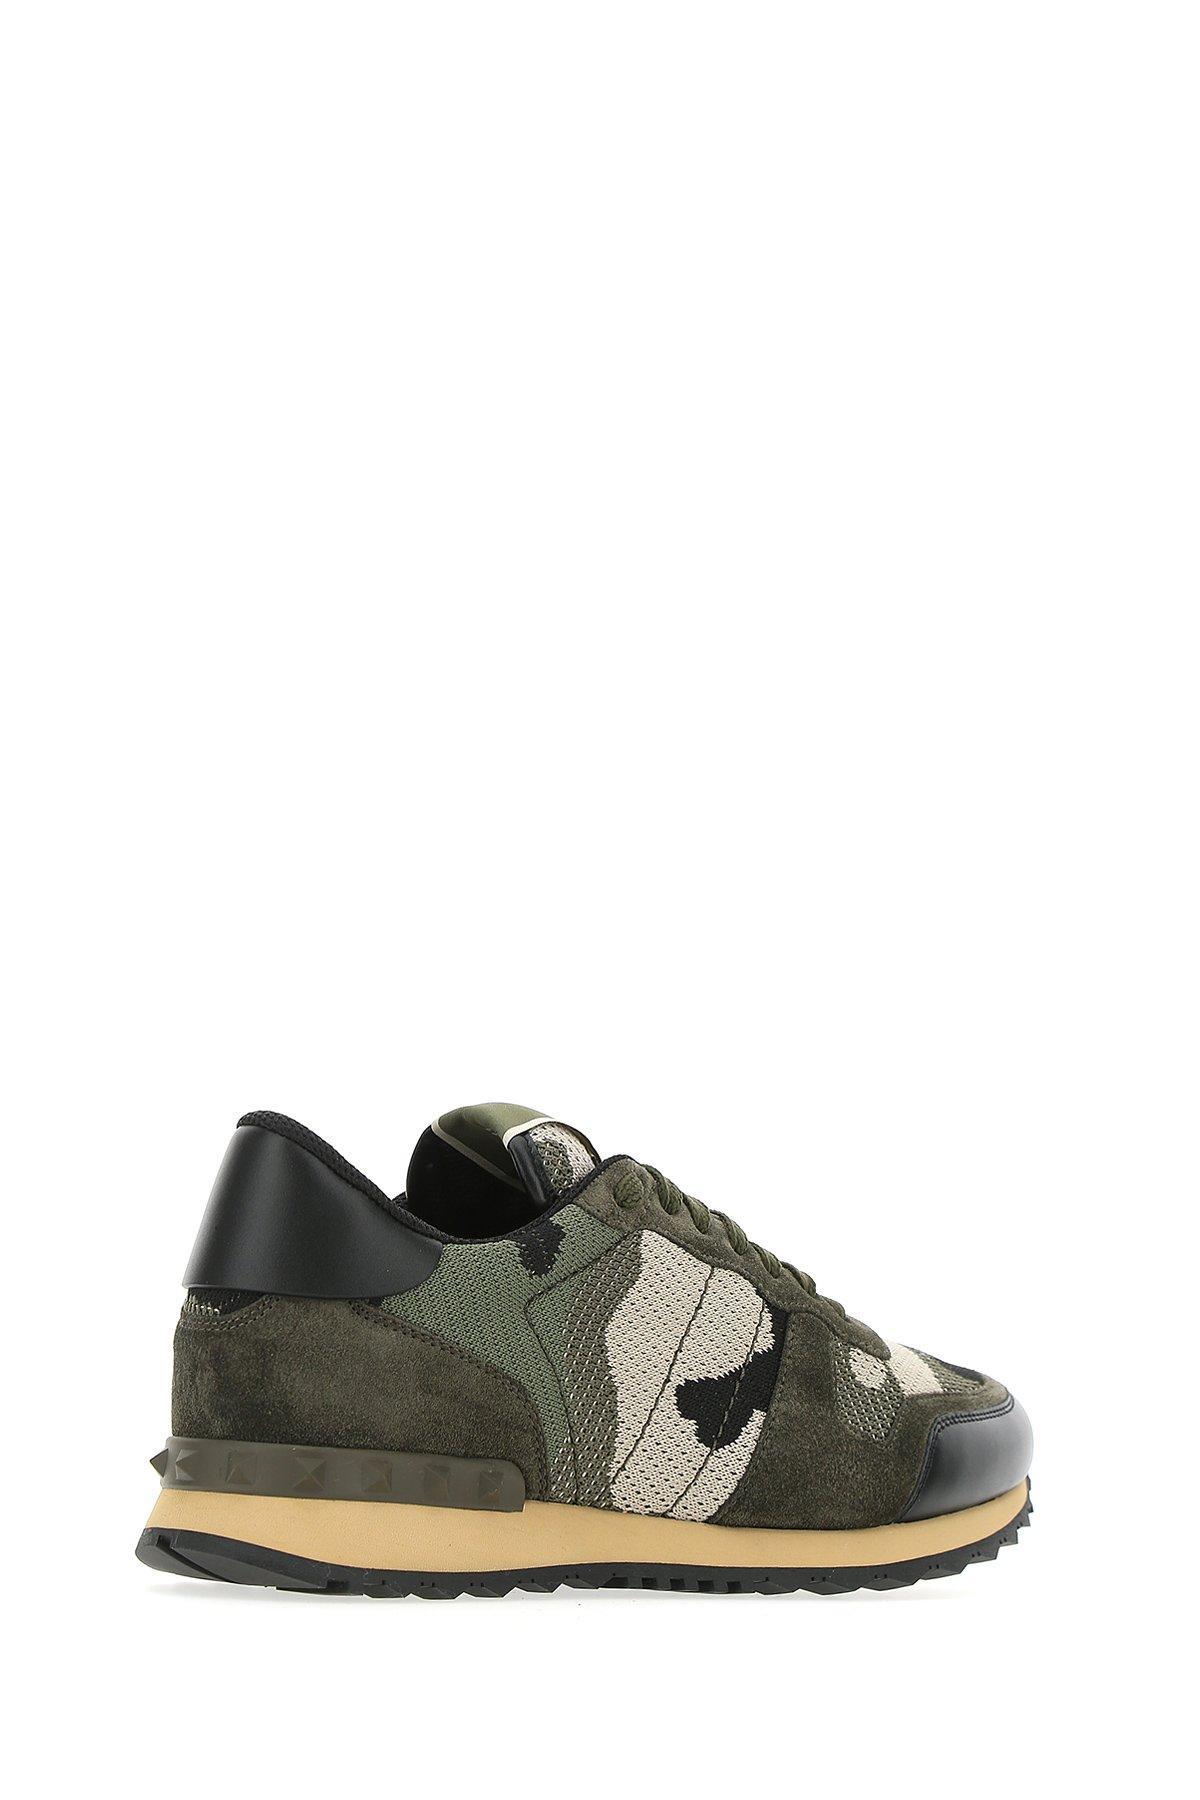 Valentino Garavani Rubber Mesh Fabric Camouflage Rockrunner Sneaker in ...